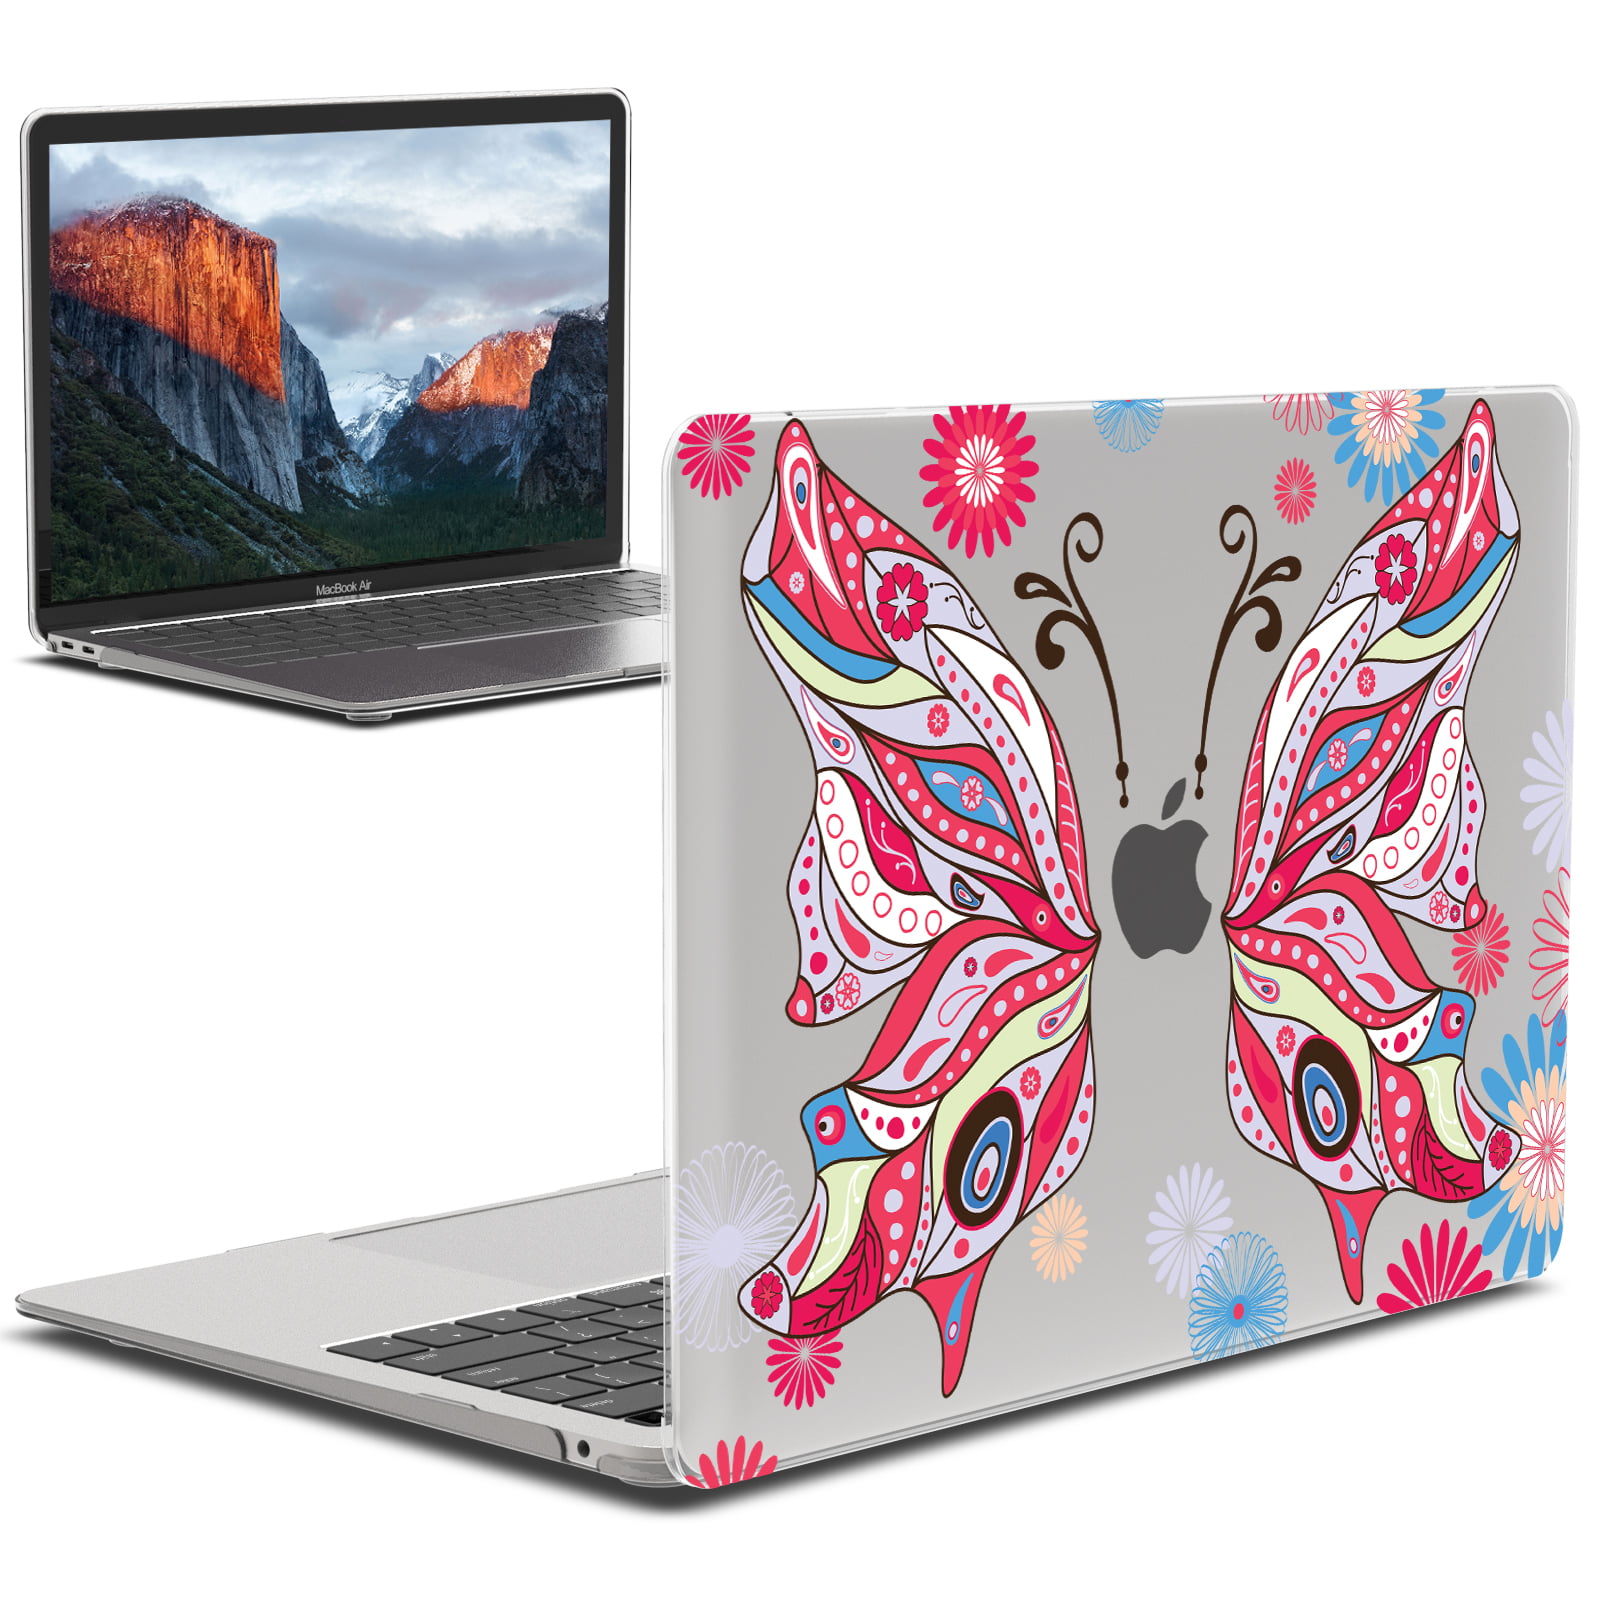 Red white Paints Macbook 2019 Hard Macbook Cover Macbook Air 11 Inch Macbook Pro Retina 15 Hard Case Macbook Air 13 Case Macbook Cover 12